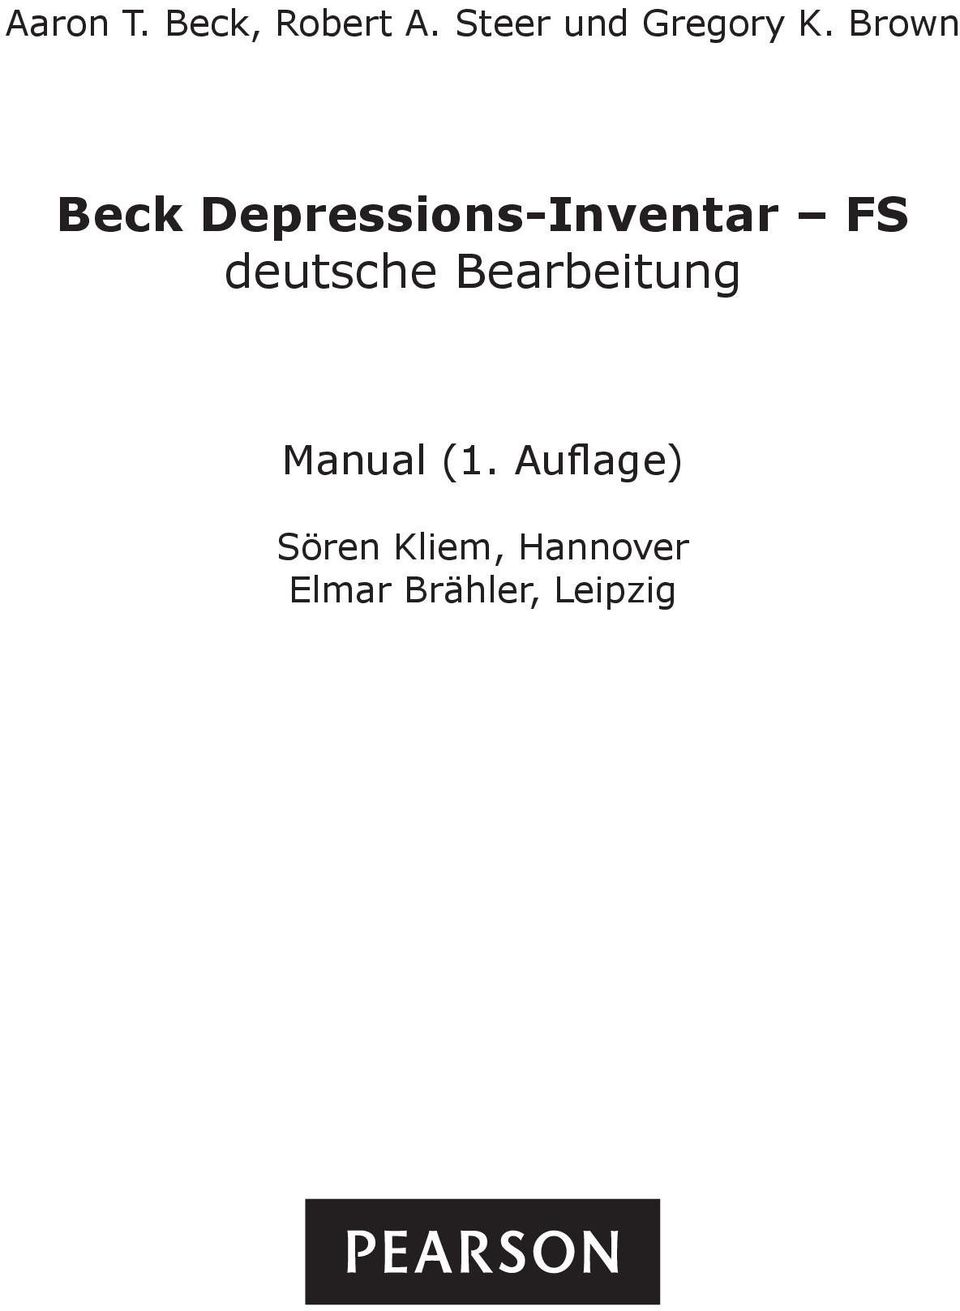 Brown Beck Depressions-Inventar FS